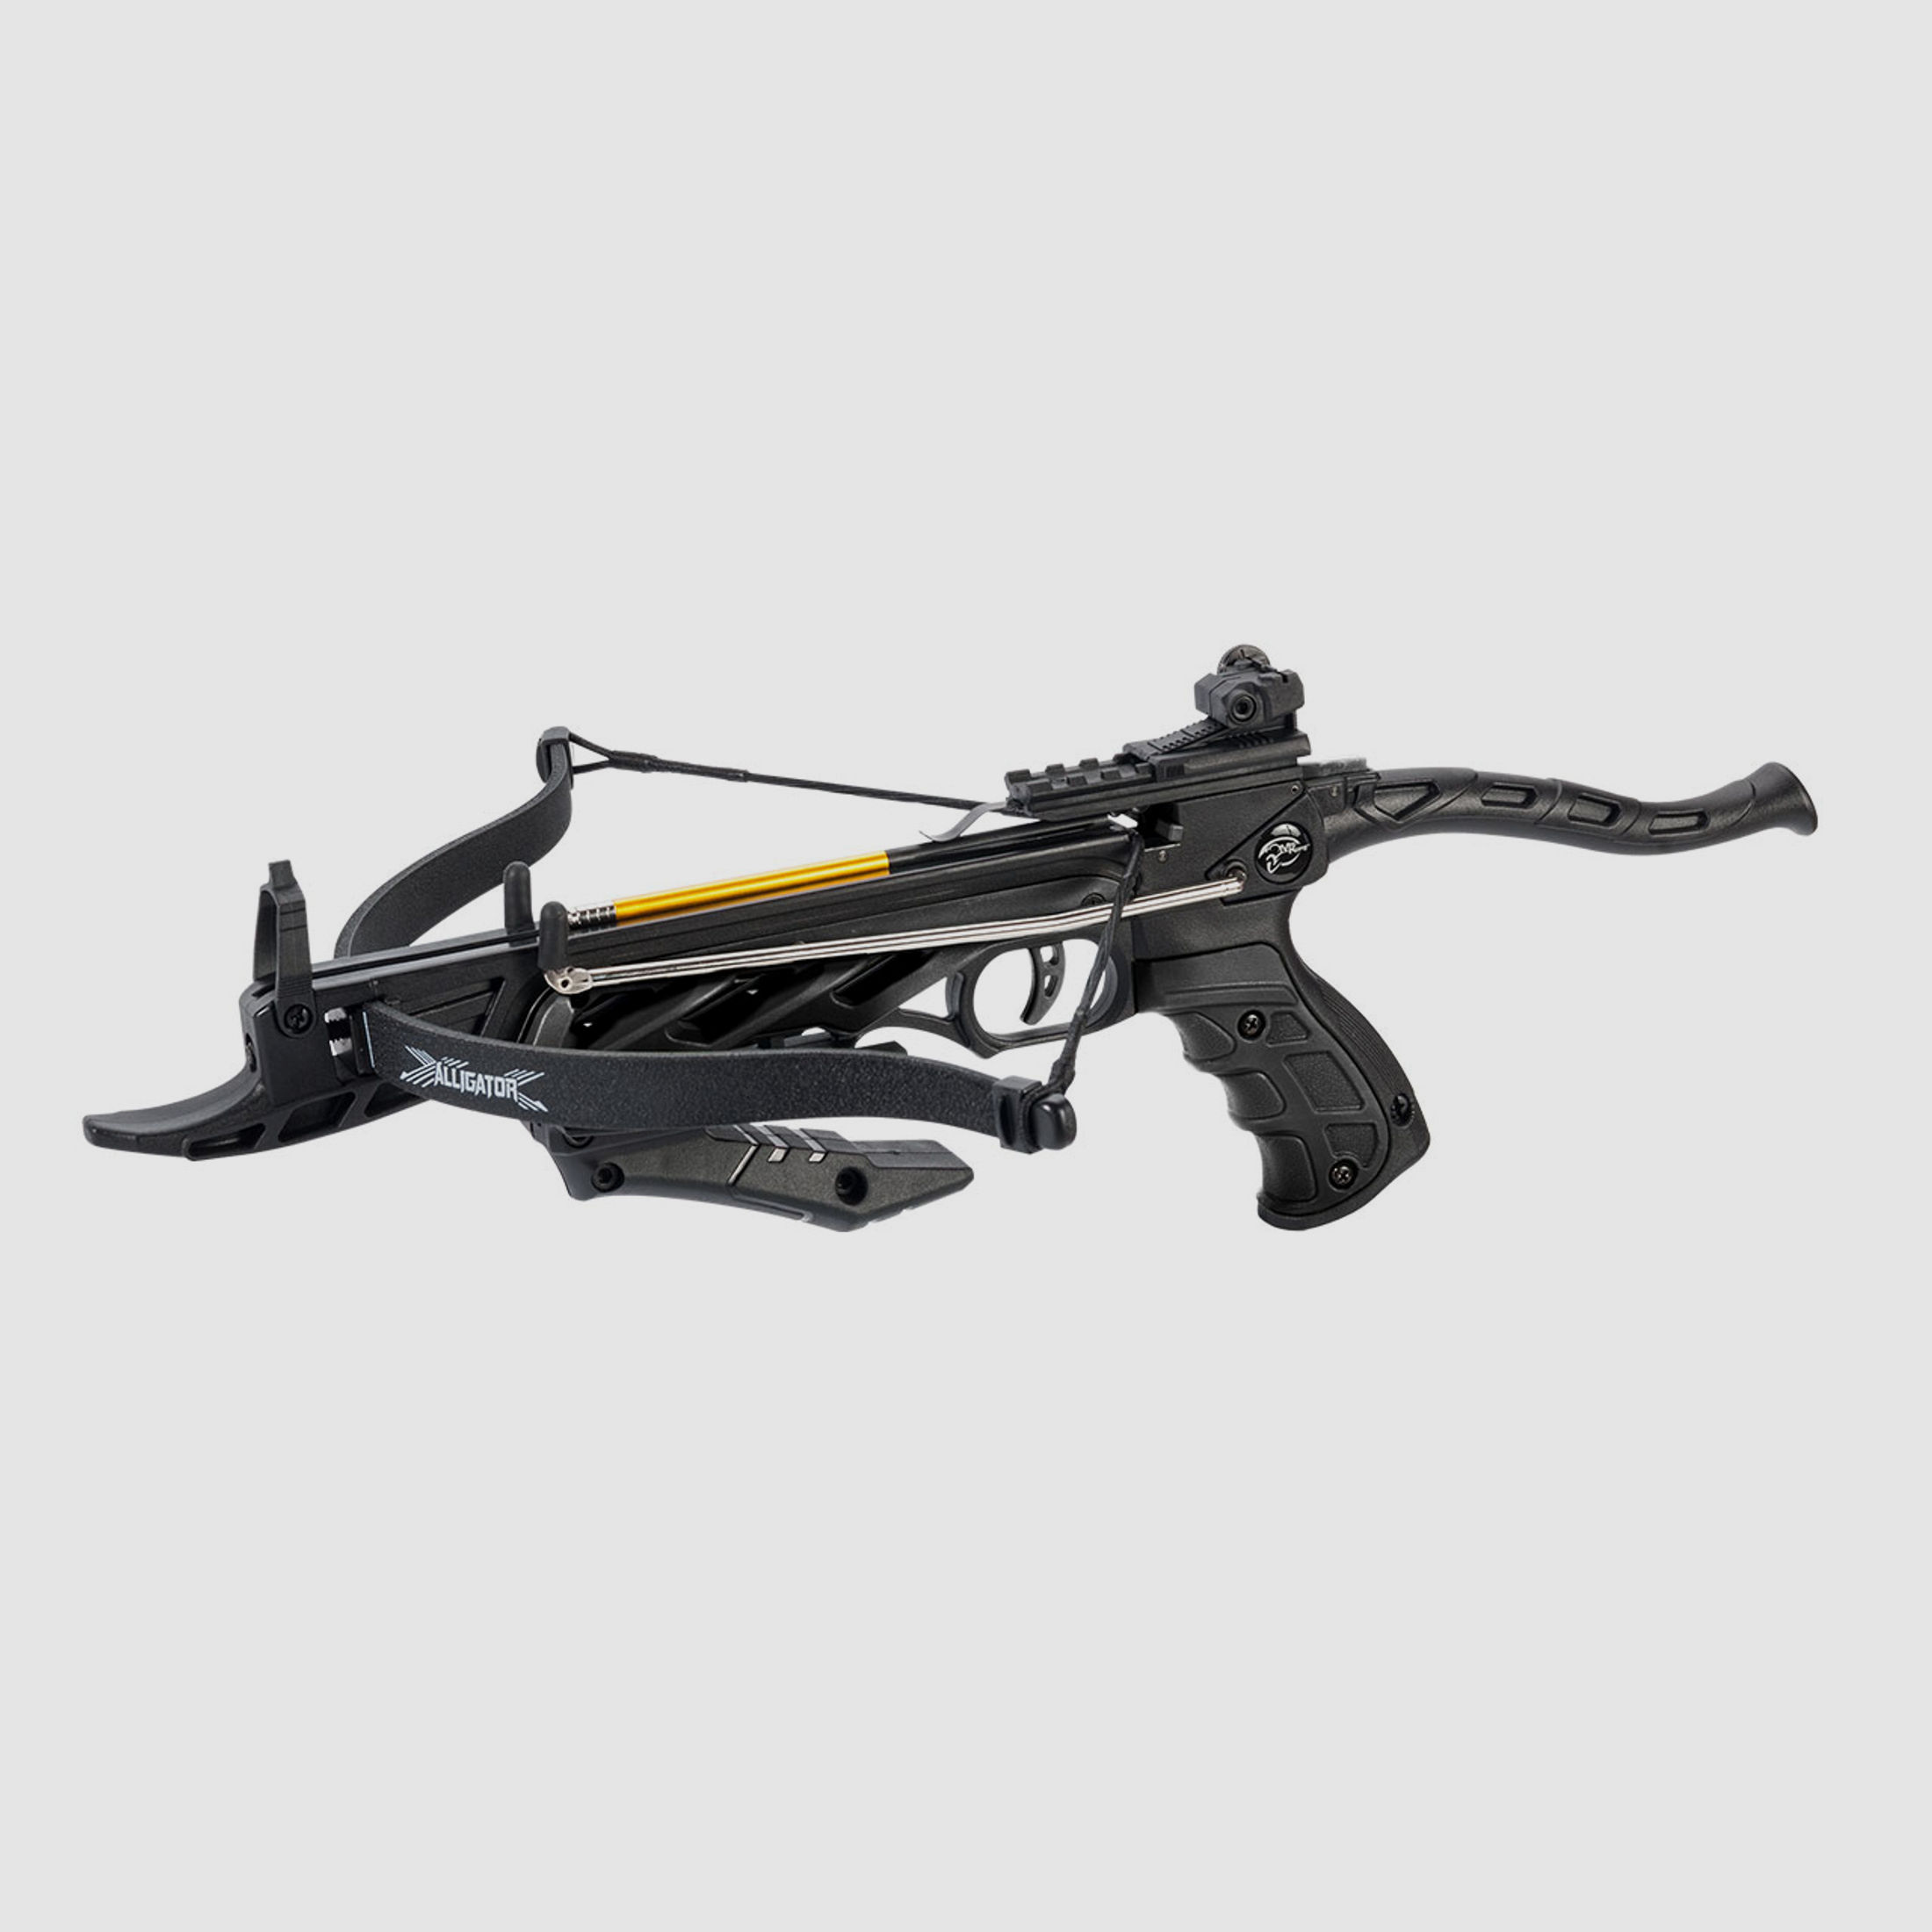 Pistolenarmbrust Armbrustpistole Man Kung MK-TCS1-BK Alligator 80 lbs schwarz inklusive 3 Pfeile (P18)